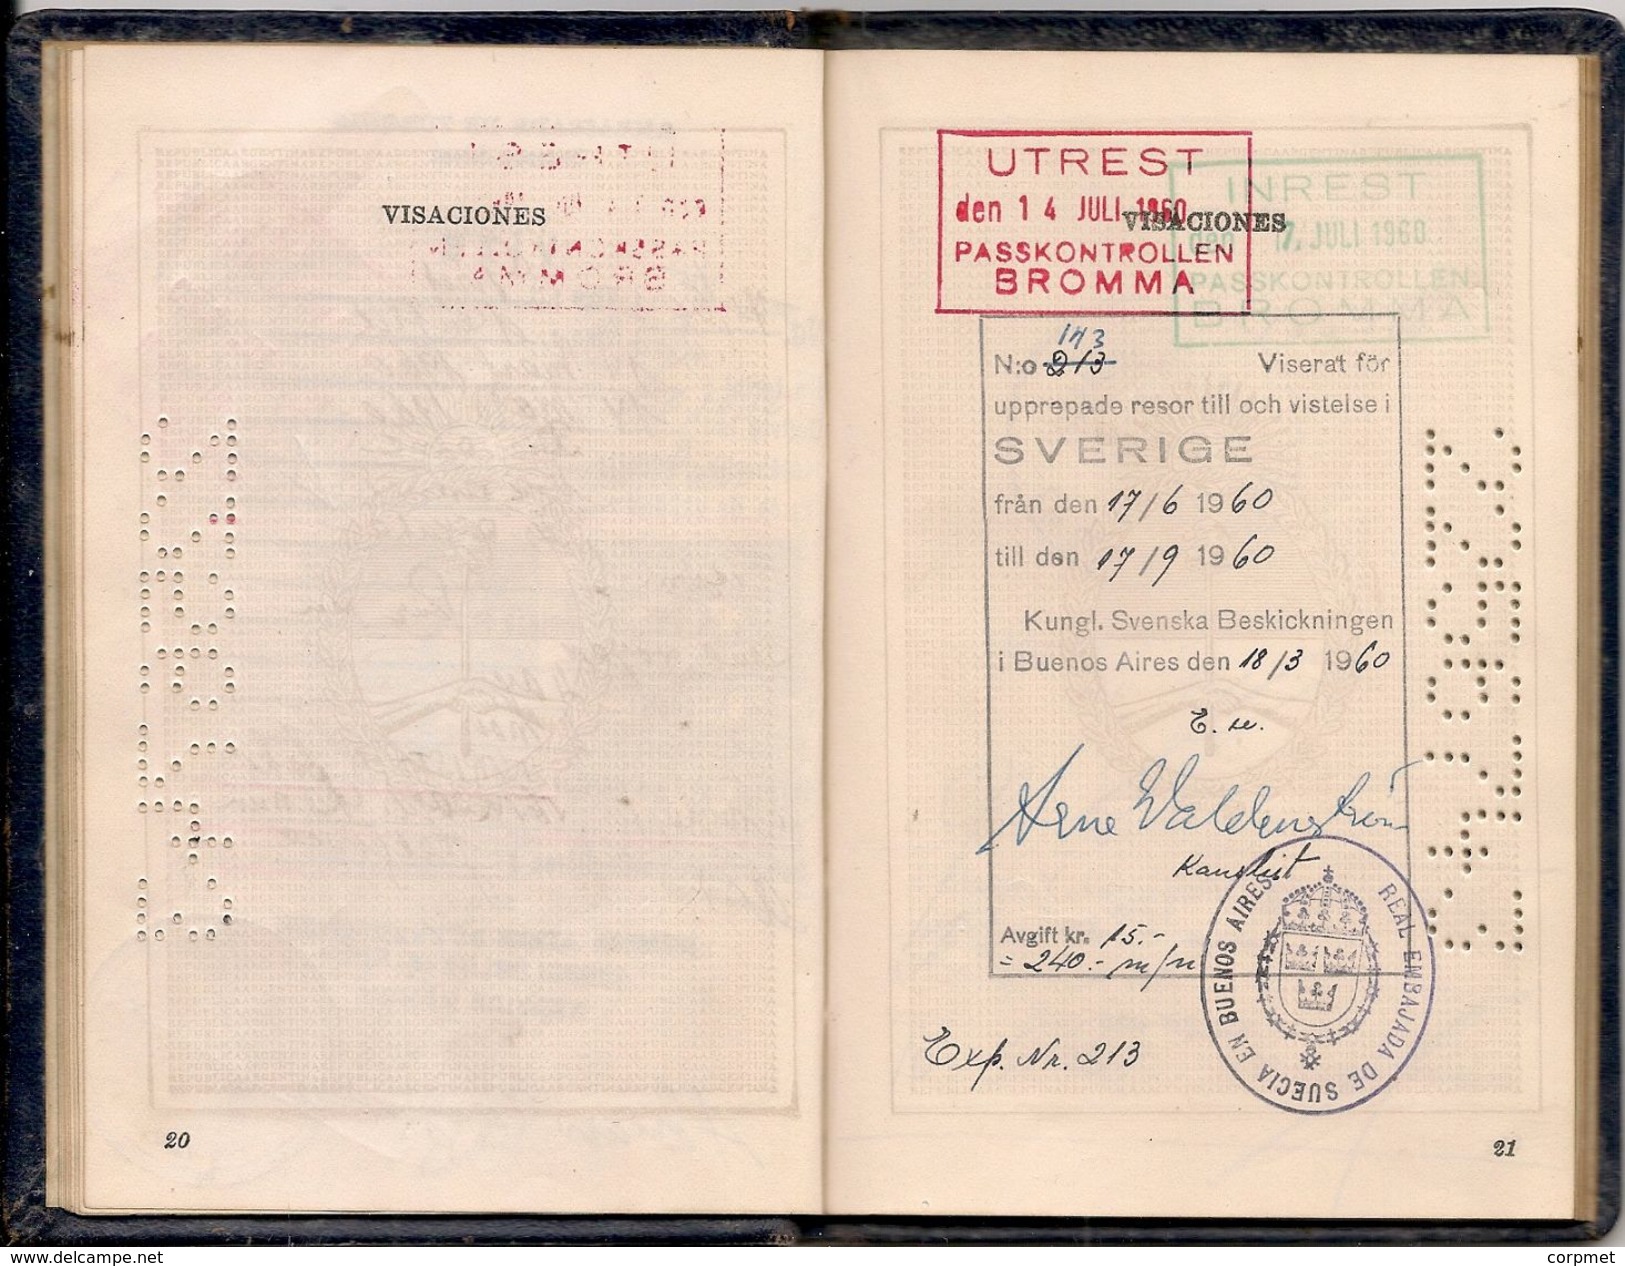 ARGENTINA fine Constantinople Sephardic Jew - PASSPORT - PASSEPORT - ISRAEL - TURKEY - ITALIA - FRANCE VISAS and REVENUE